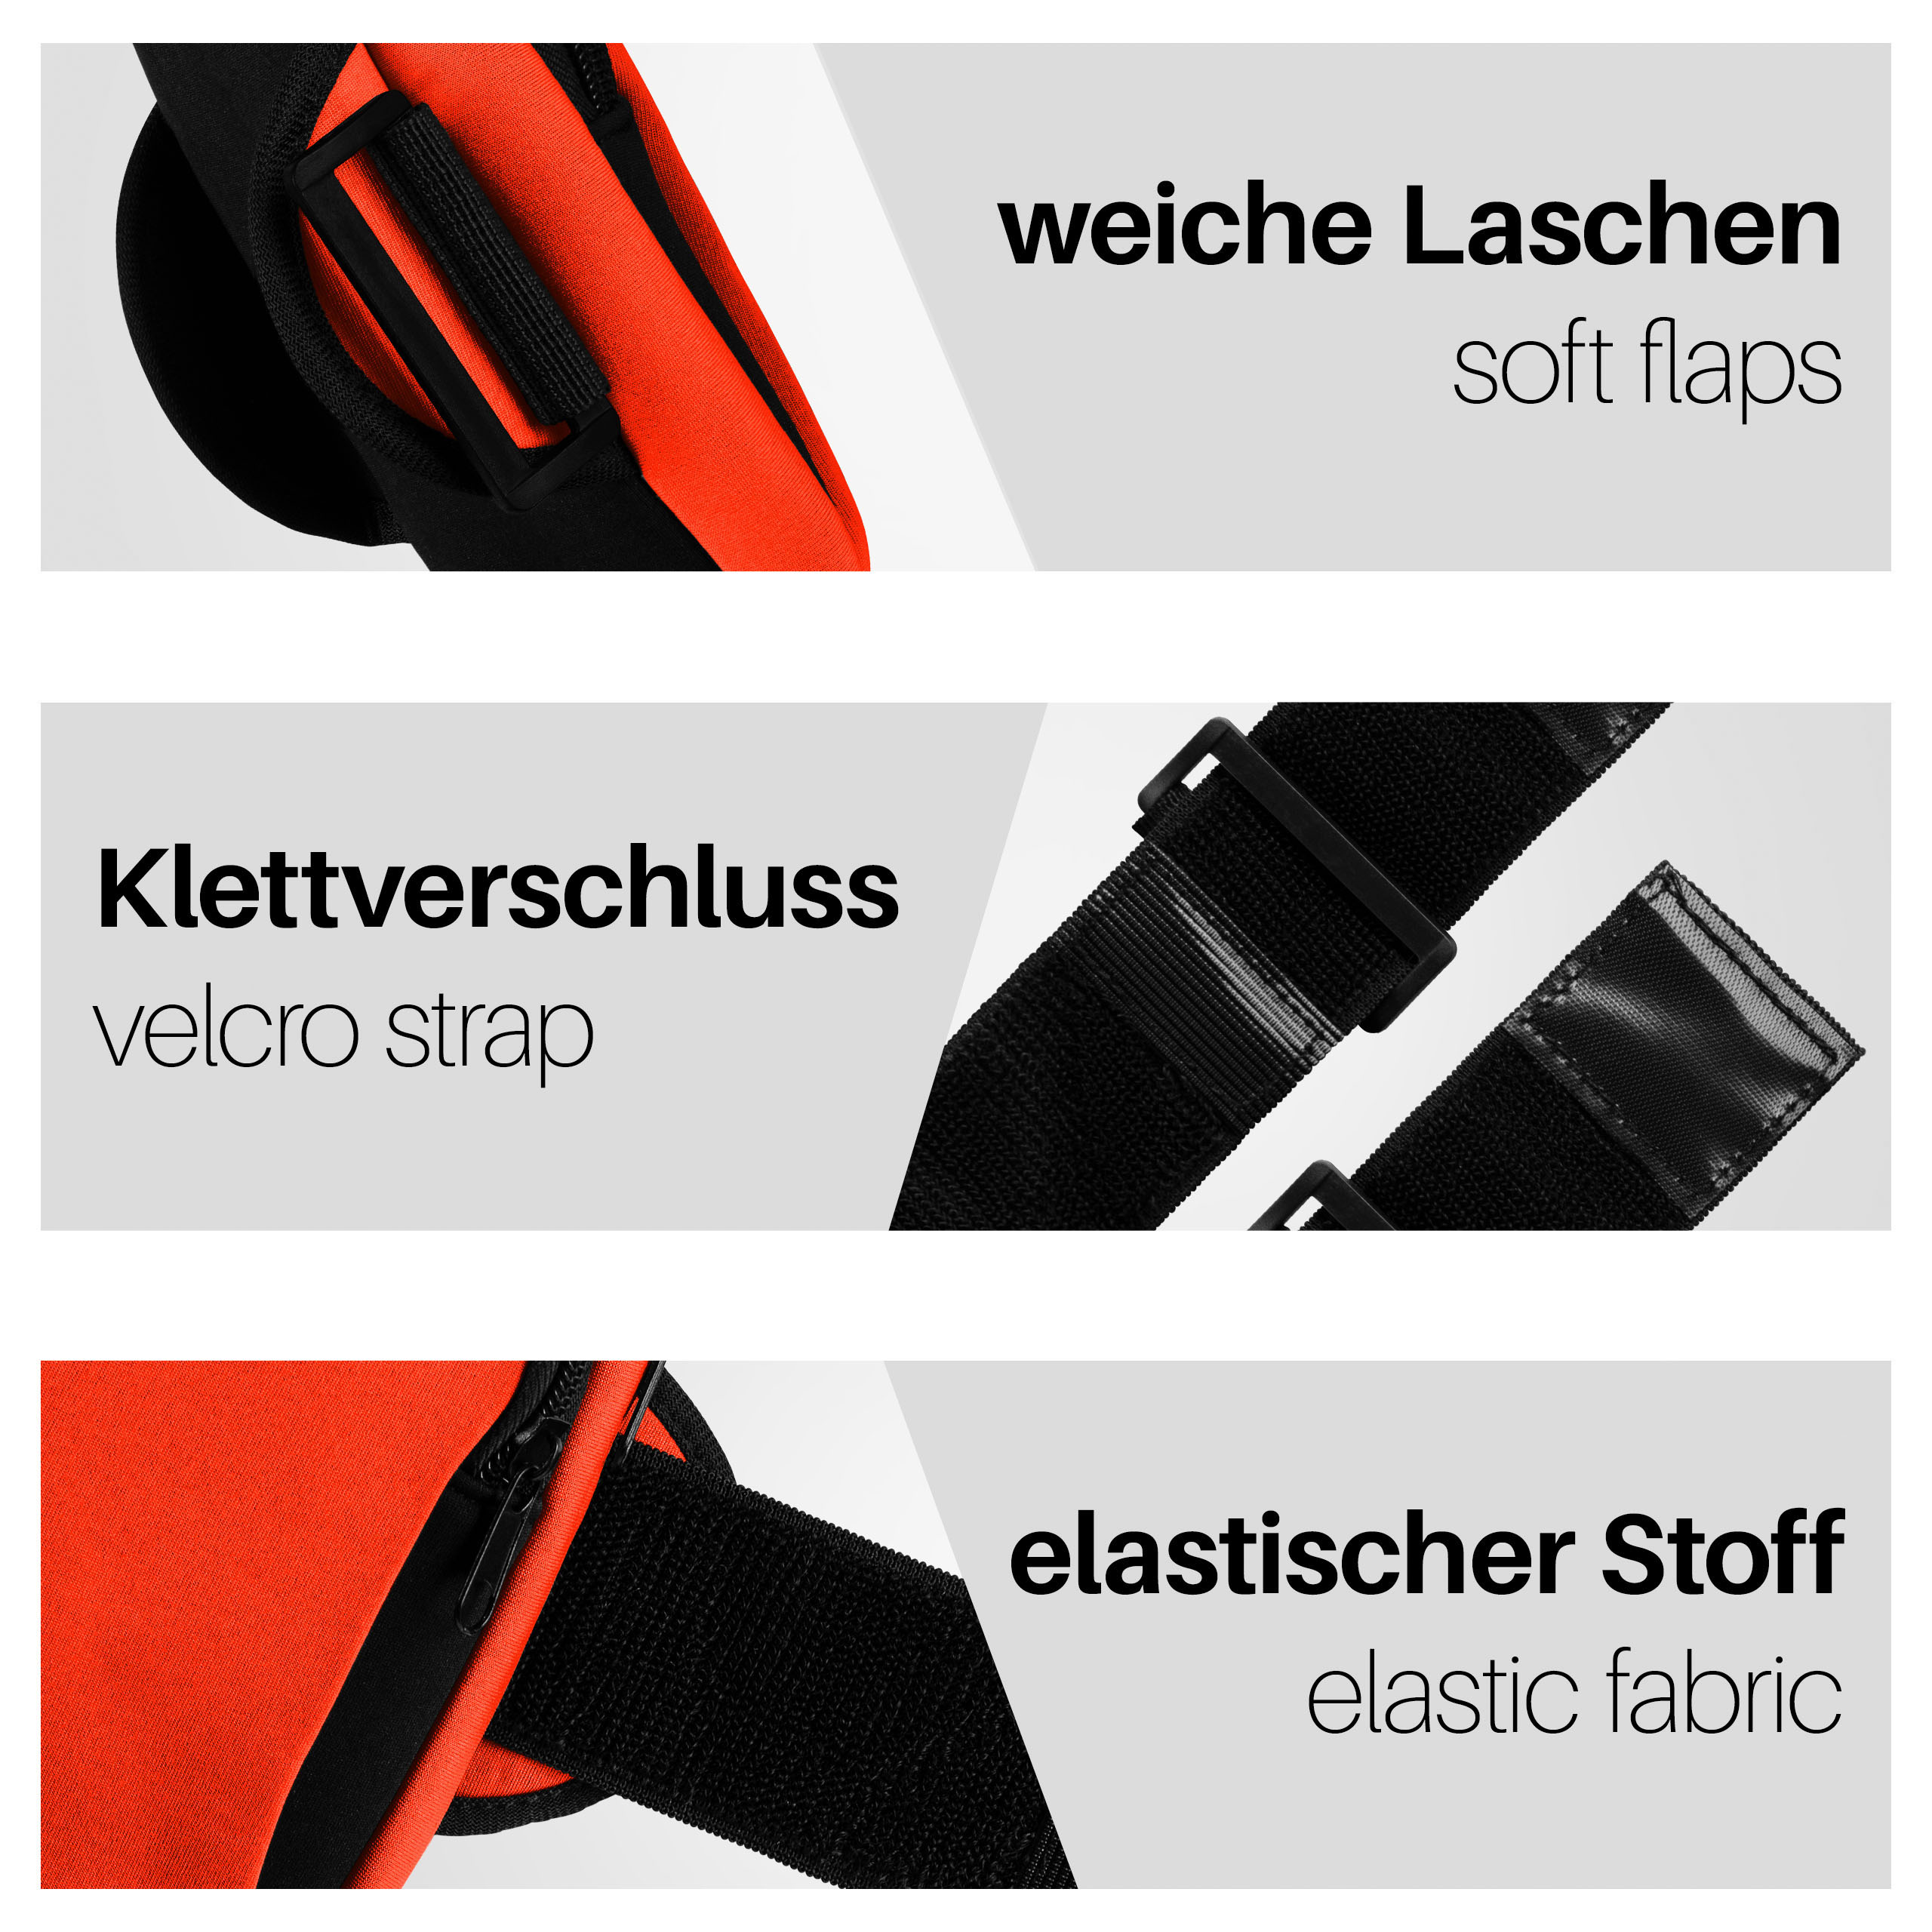 Cover, MOEX Sport OnePlus, Orange Armband, 7, Full